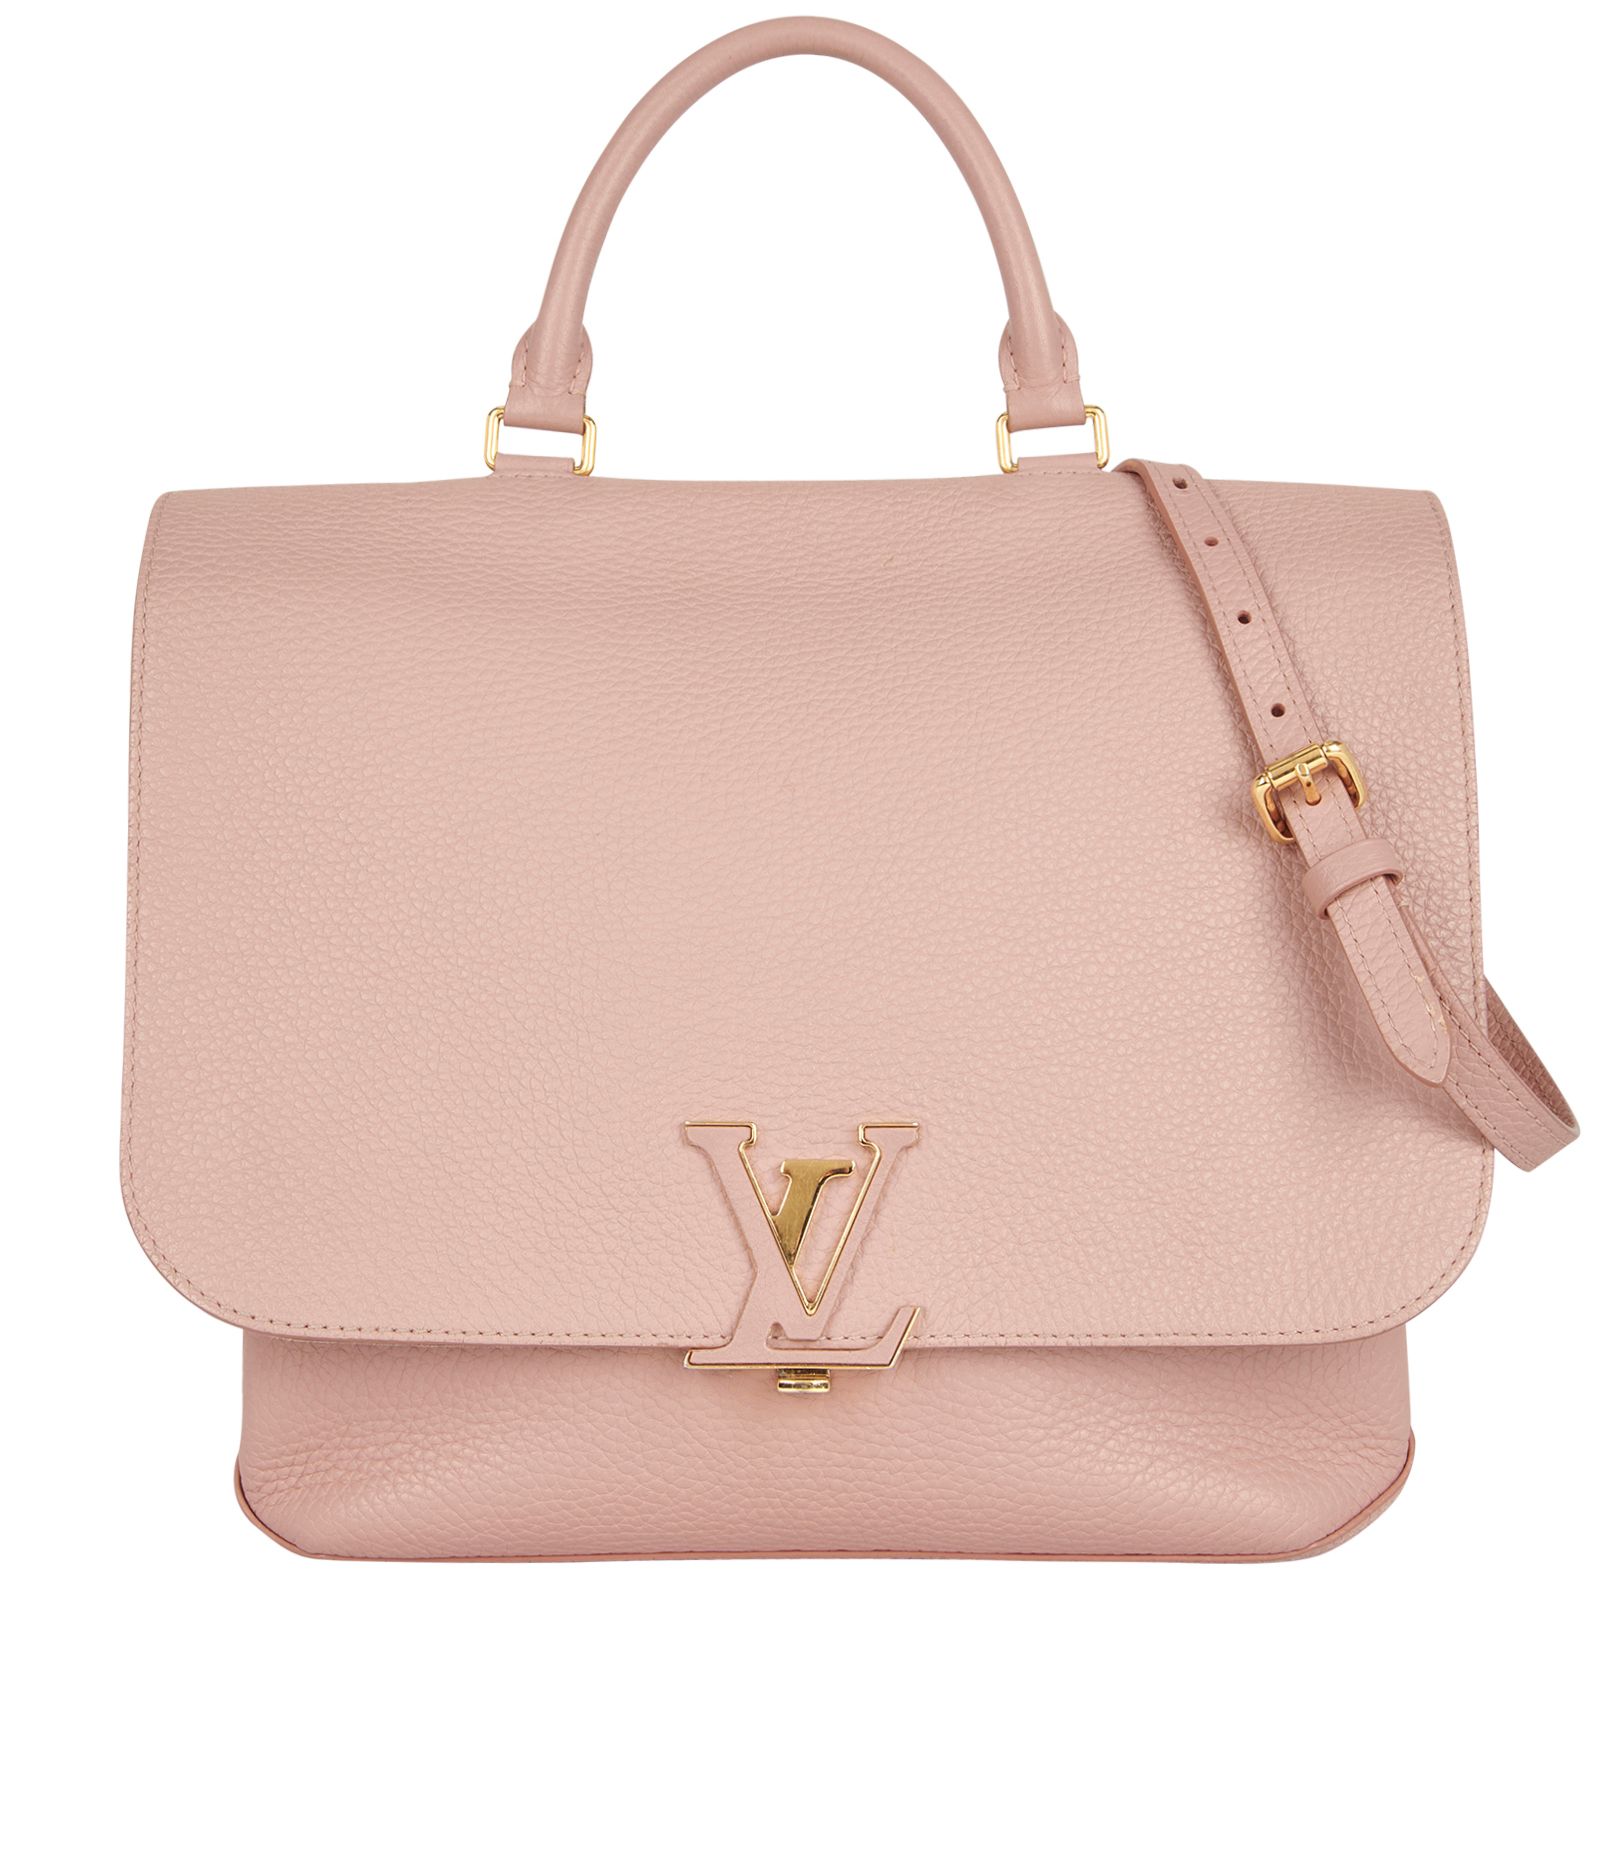 Louis Vuitton Authenticated Suede Handbag